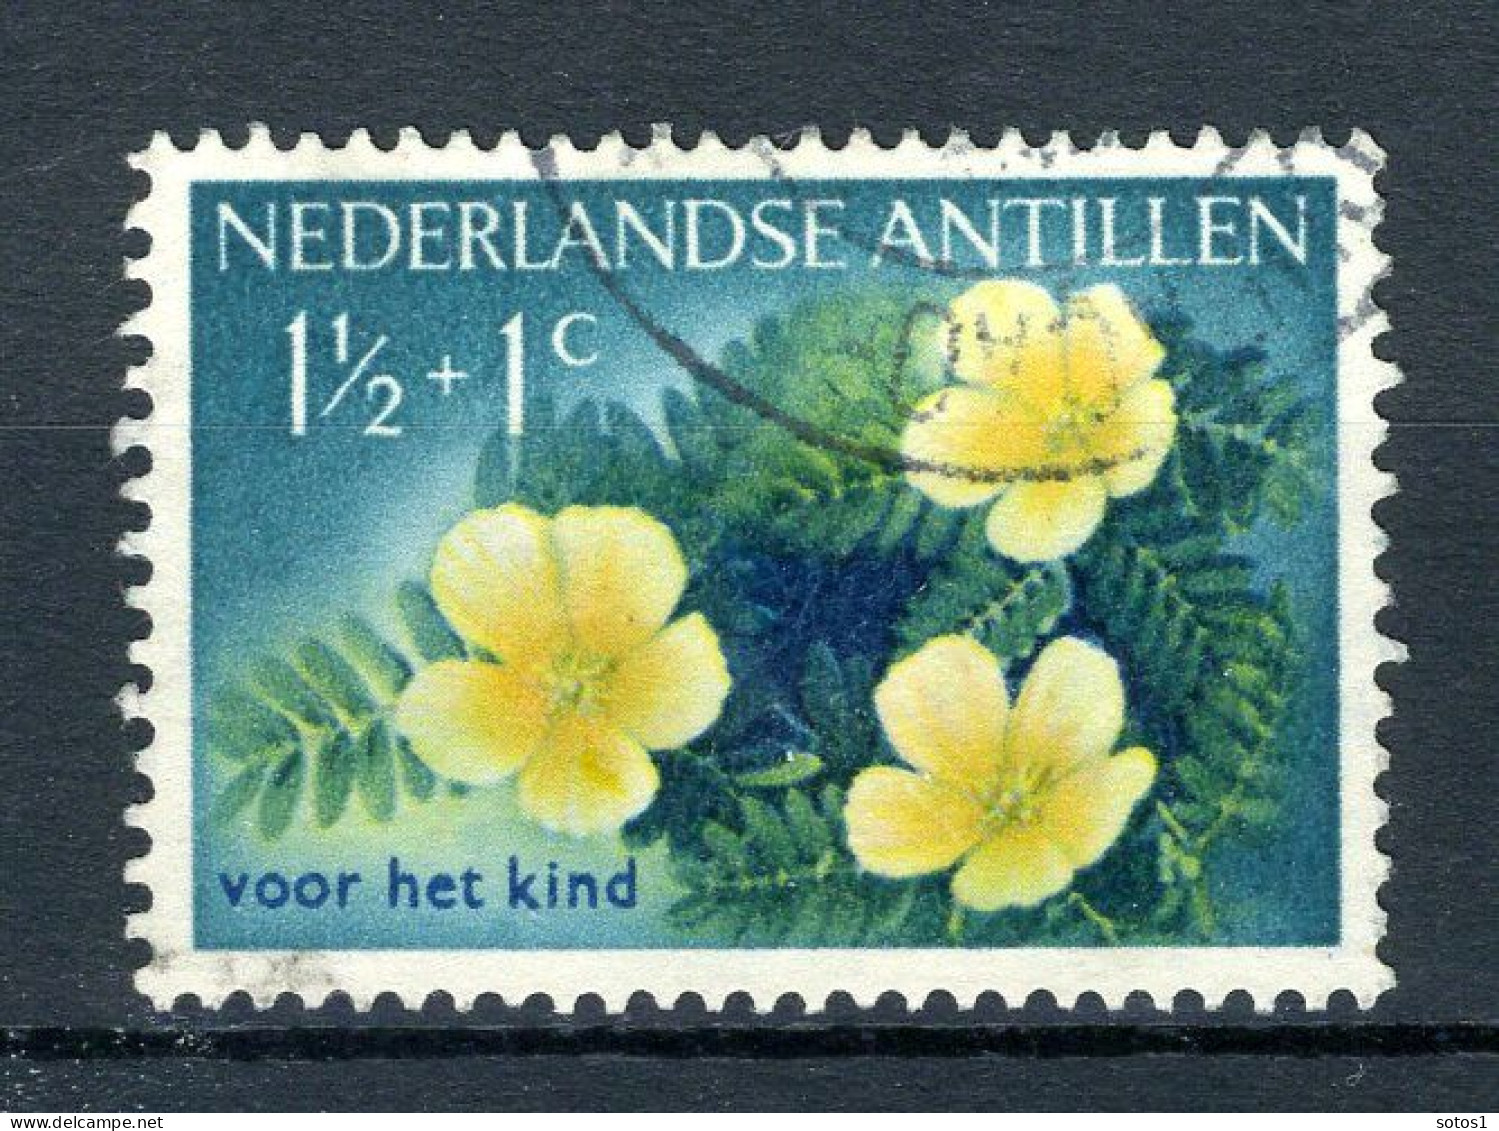 NL. ANTILLEN 248 Gestempeld 1955 - Kinderzegels, Bloemen. - Curaçao, Antilles Neérlandaises, Aruba